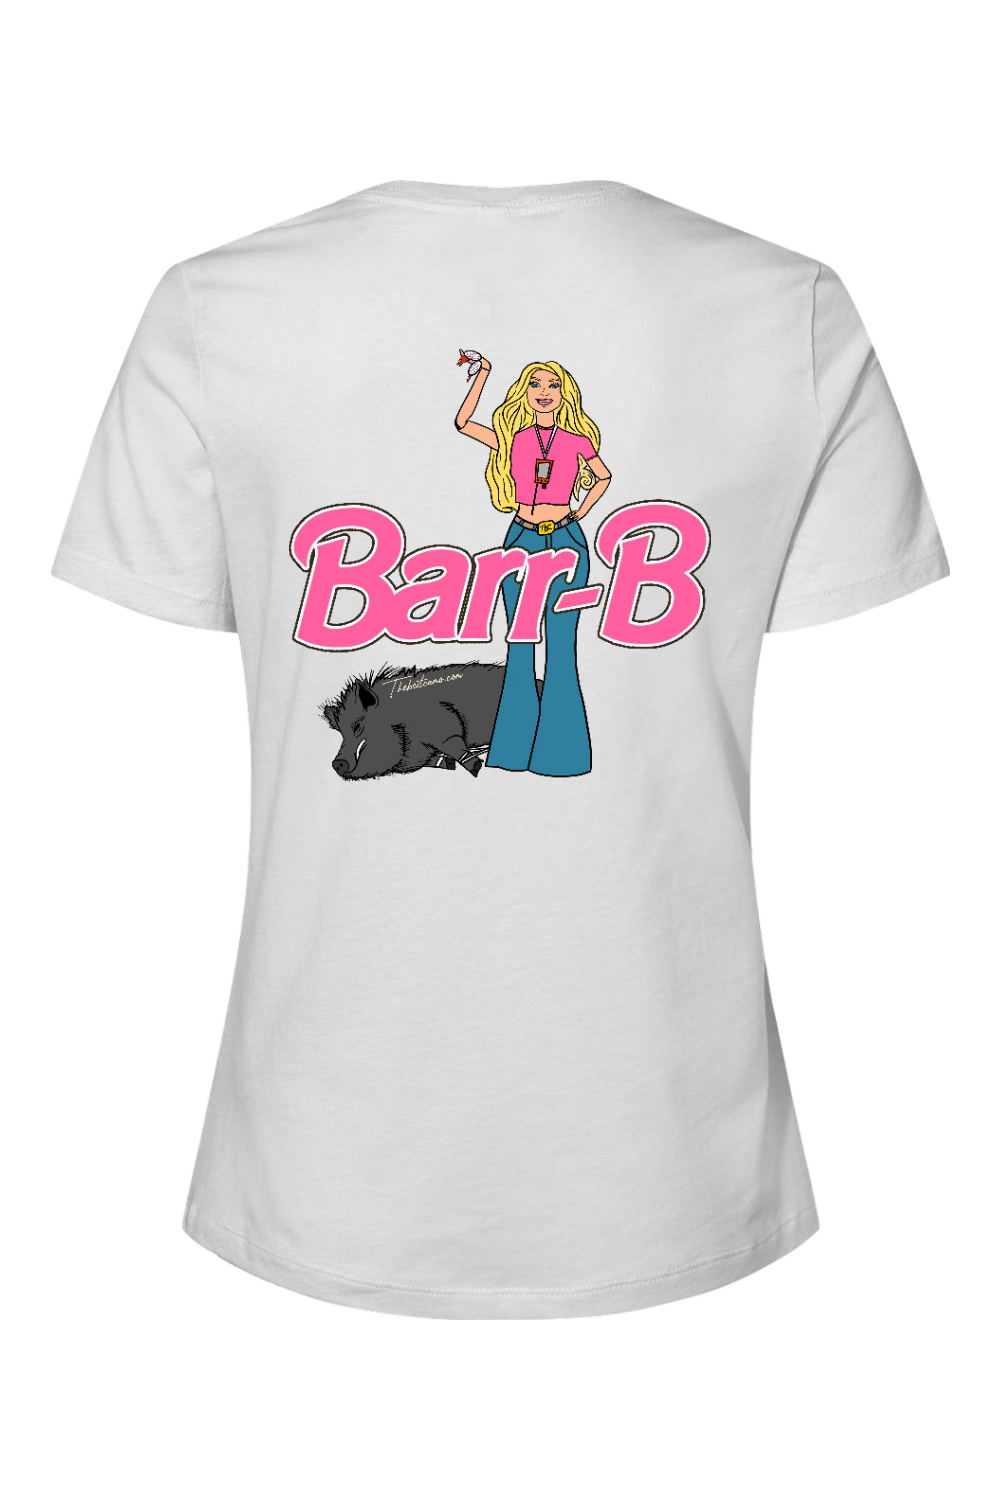 barr b womens cut tshirts